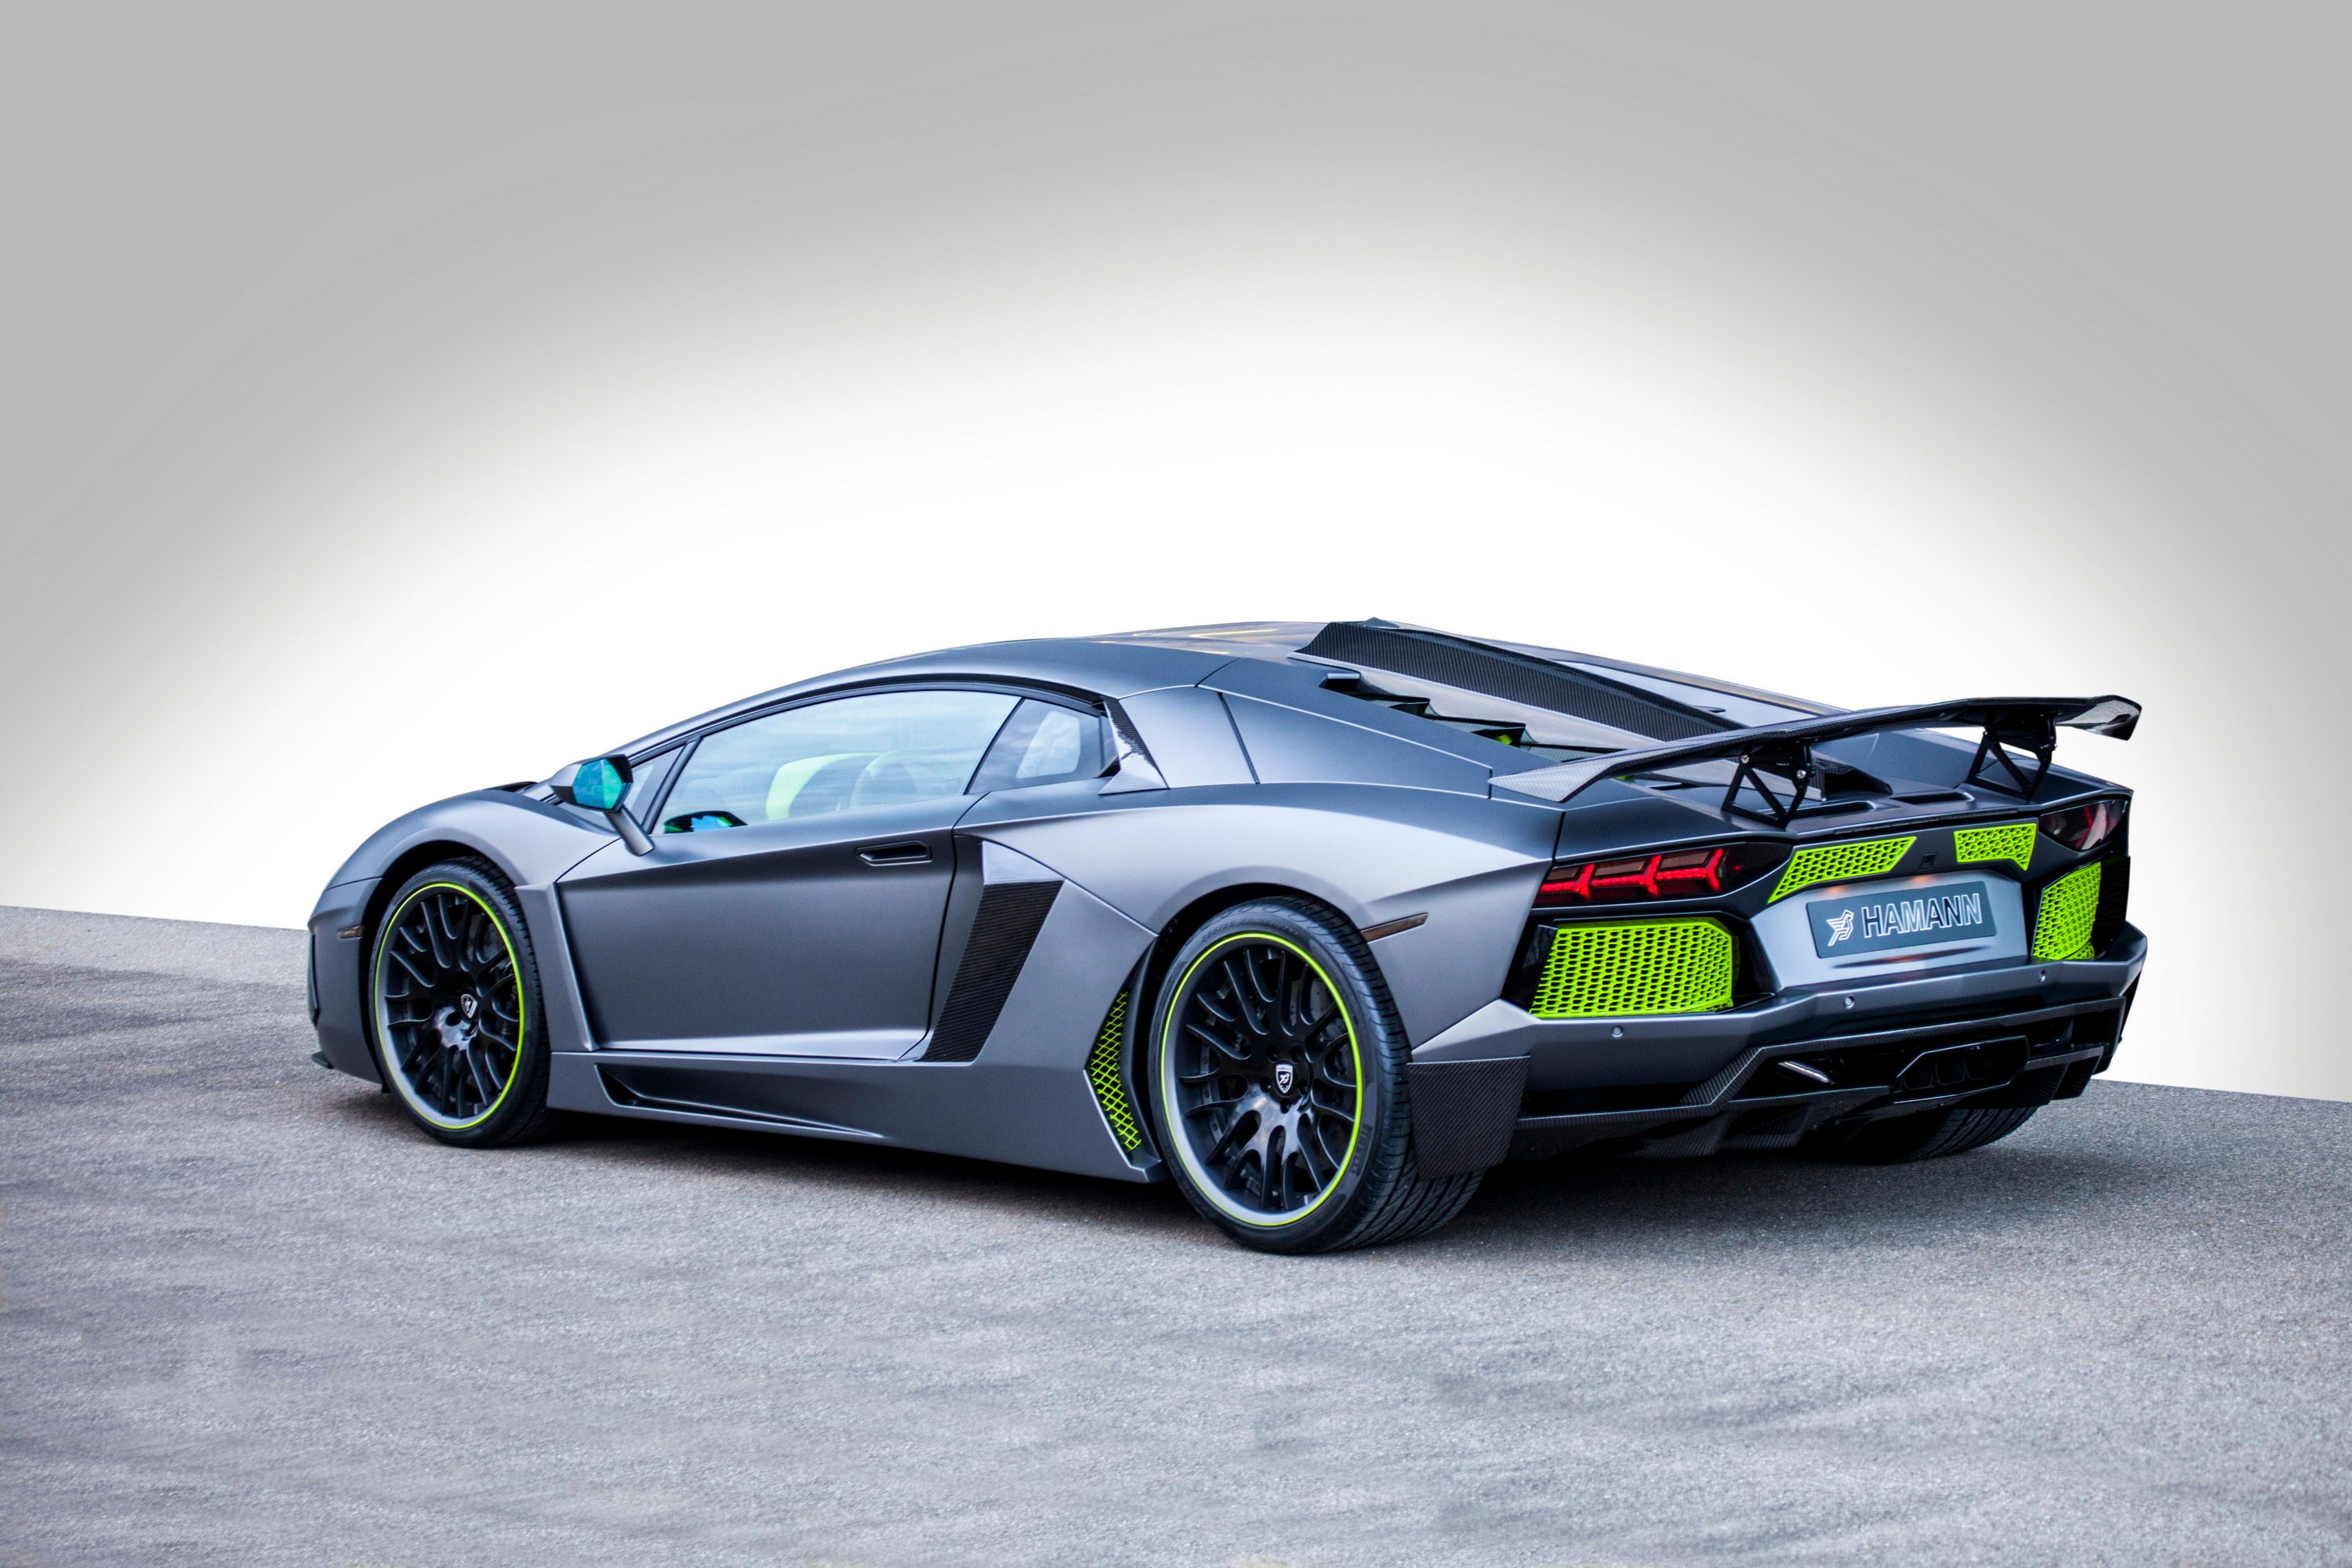 2014 Lamborghini Aventador Limited by Hamann